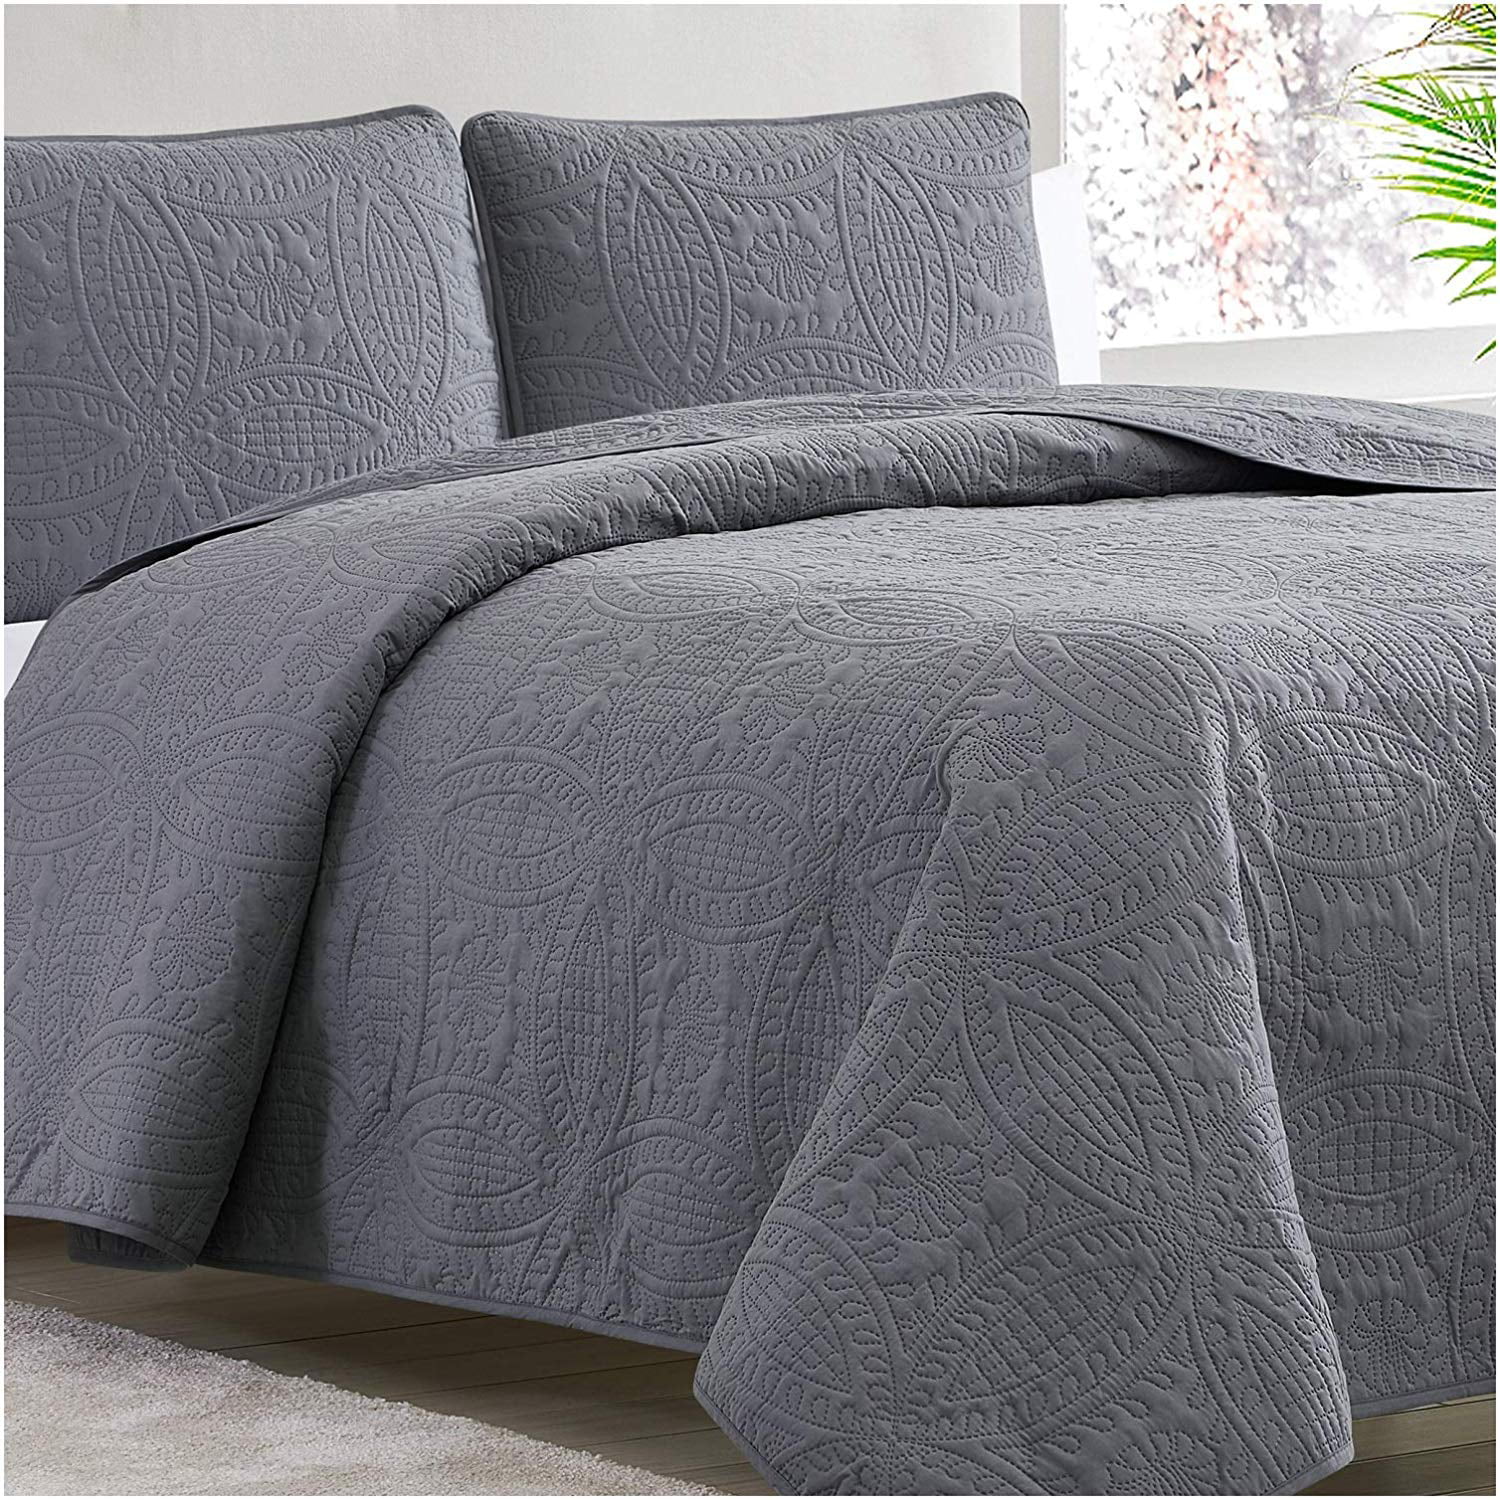 Full/Queen, Light Gray Mellanni Bedspread Coverlet Set Gray Comforter Oversized 3-Piece Quilt Set 